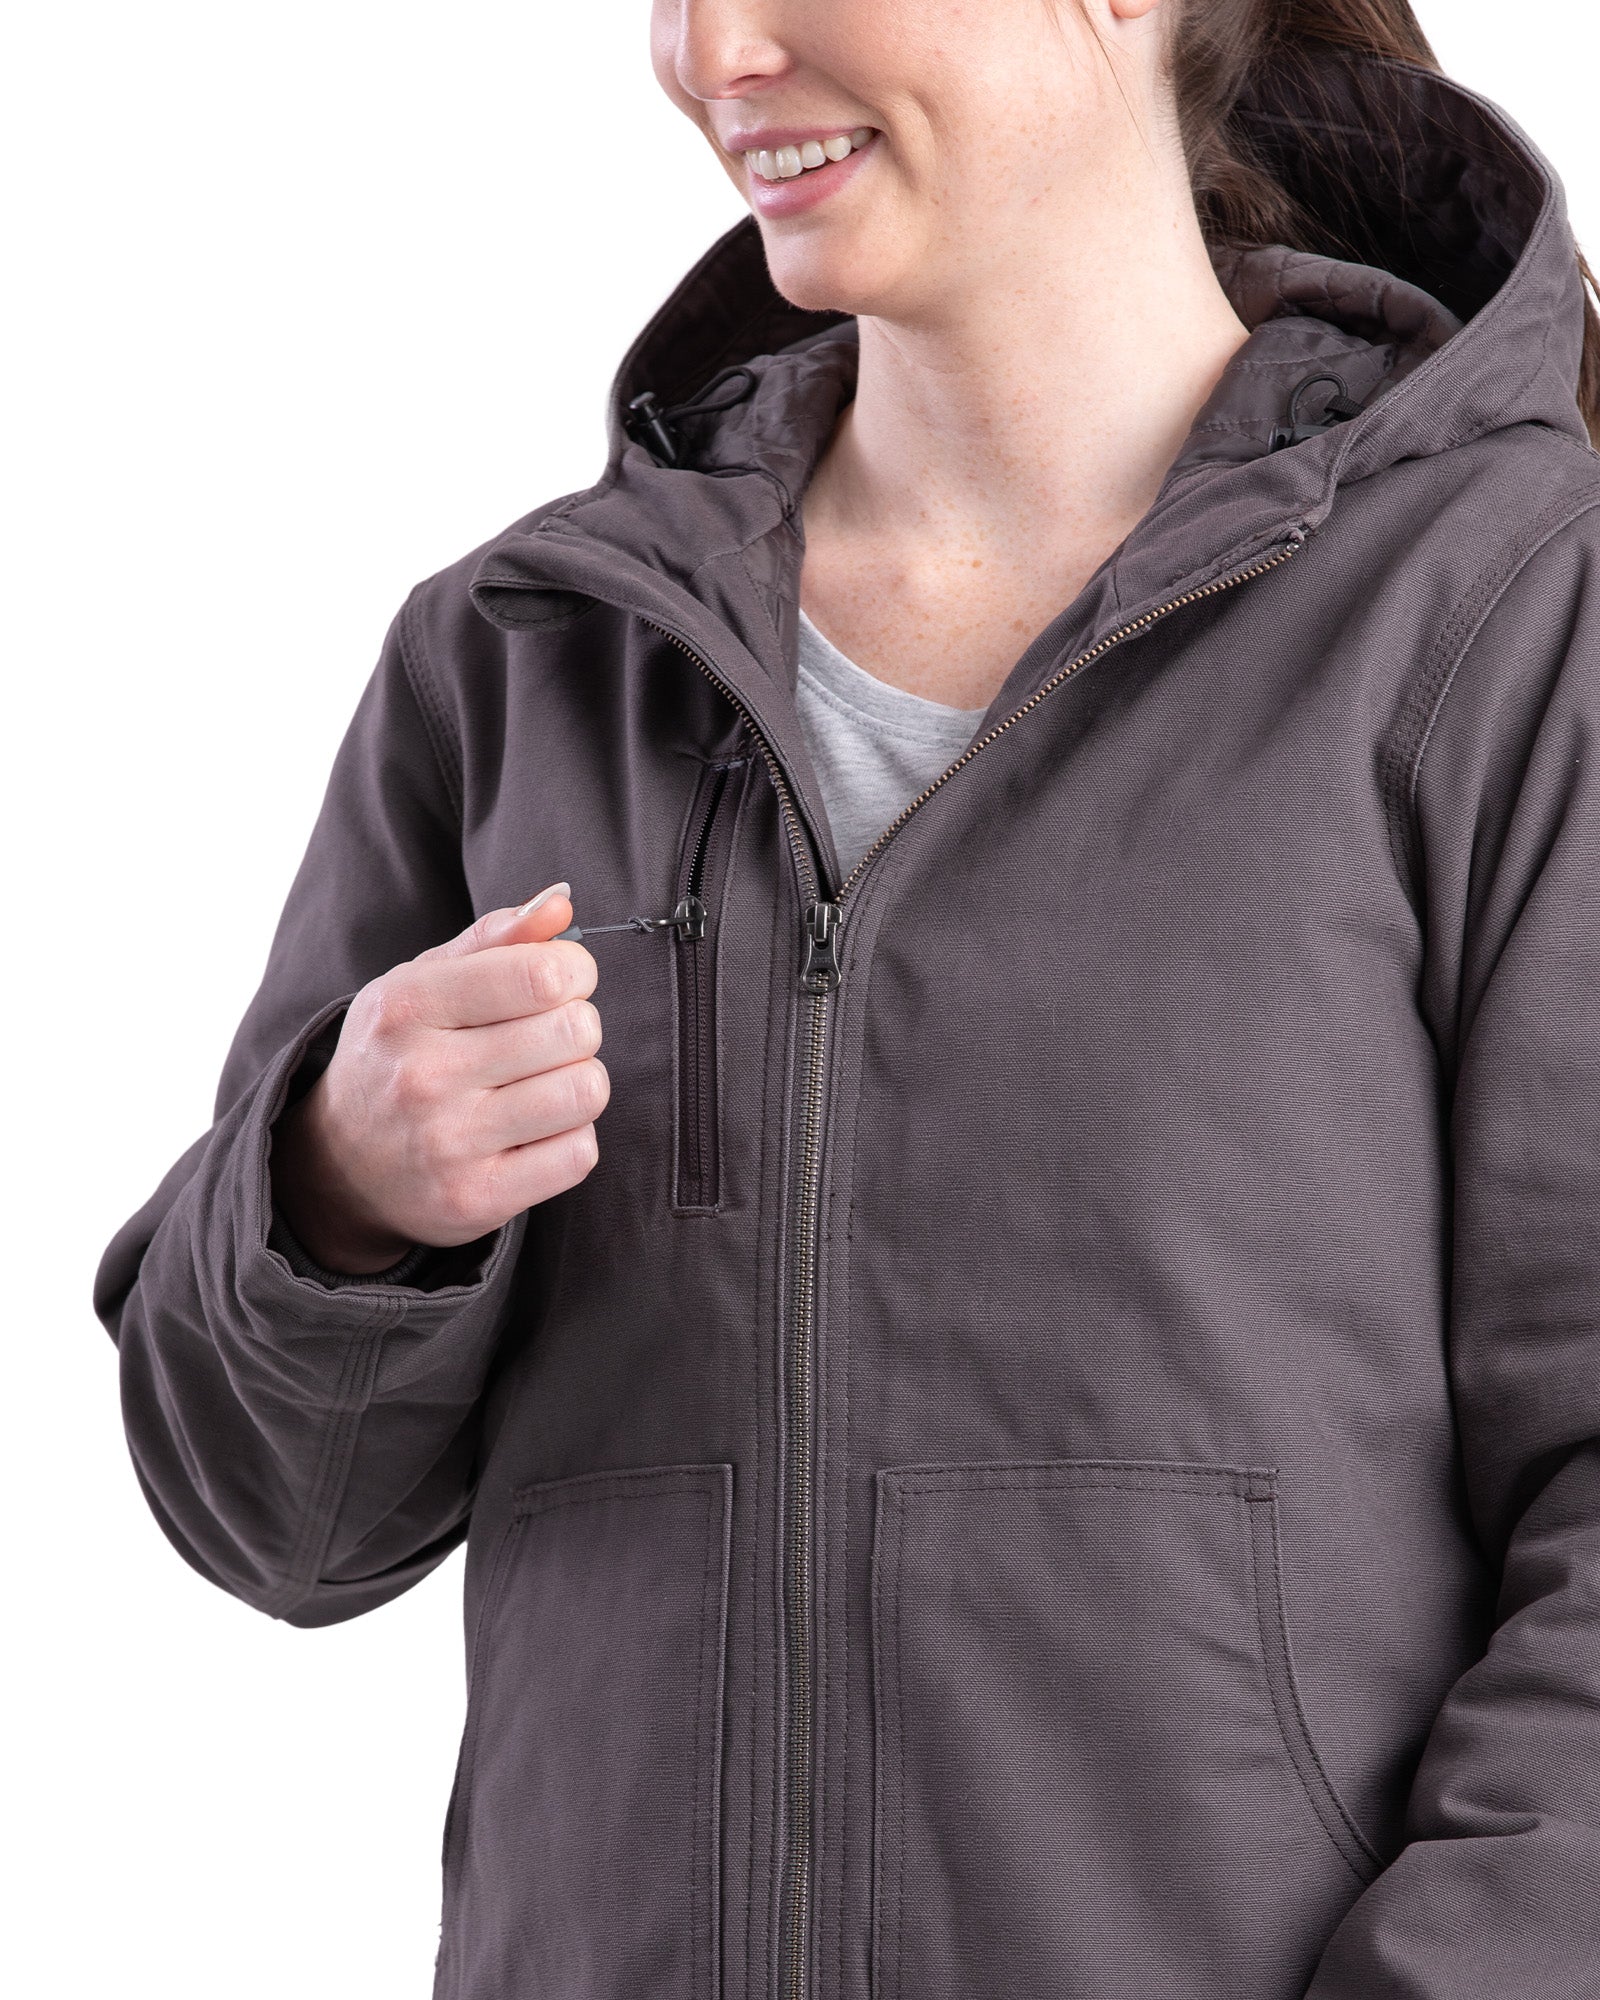 Buy Windgates Hooded Jacket for Women Online at Adventuras